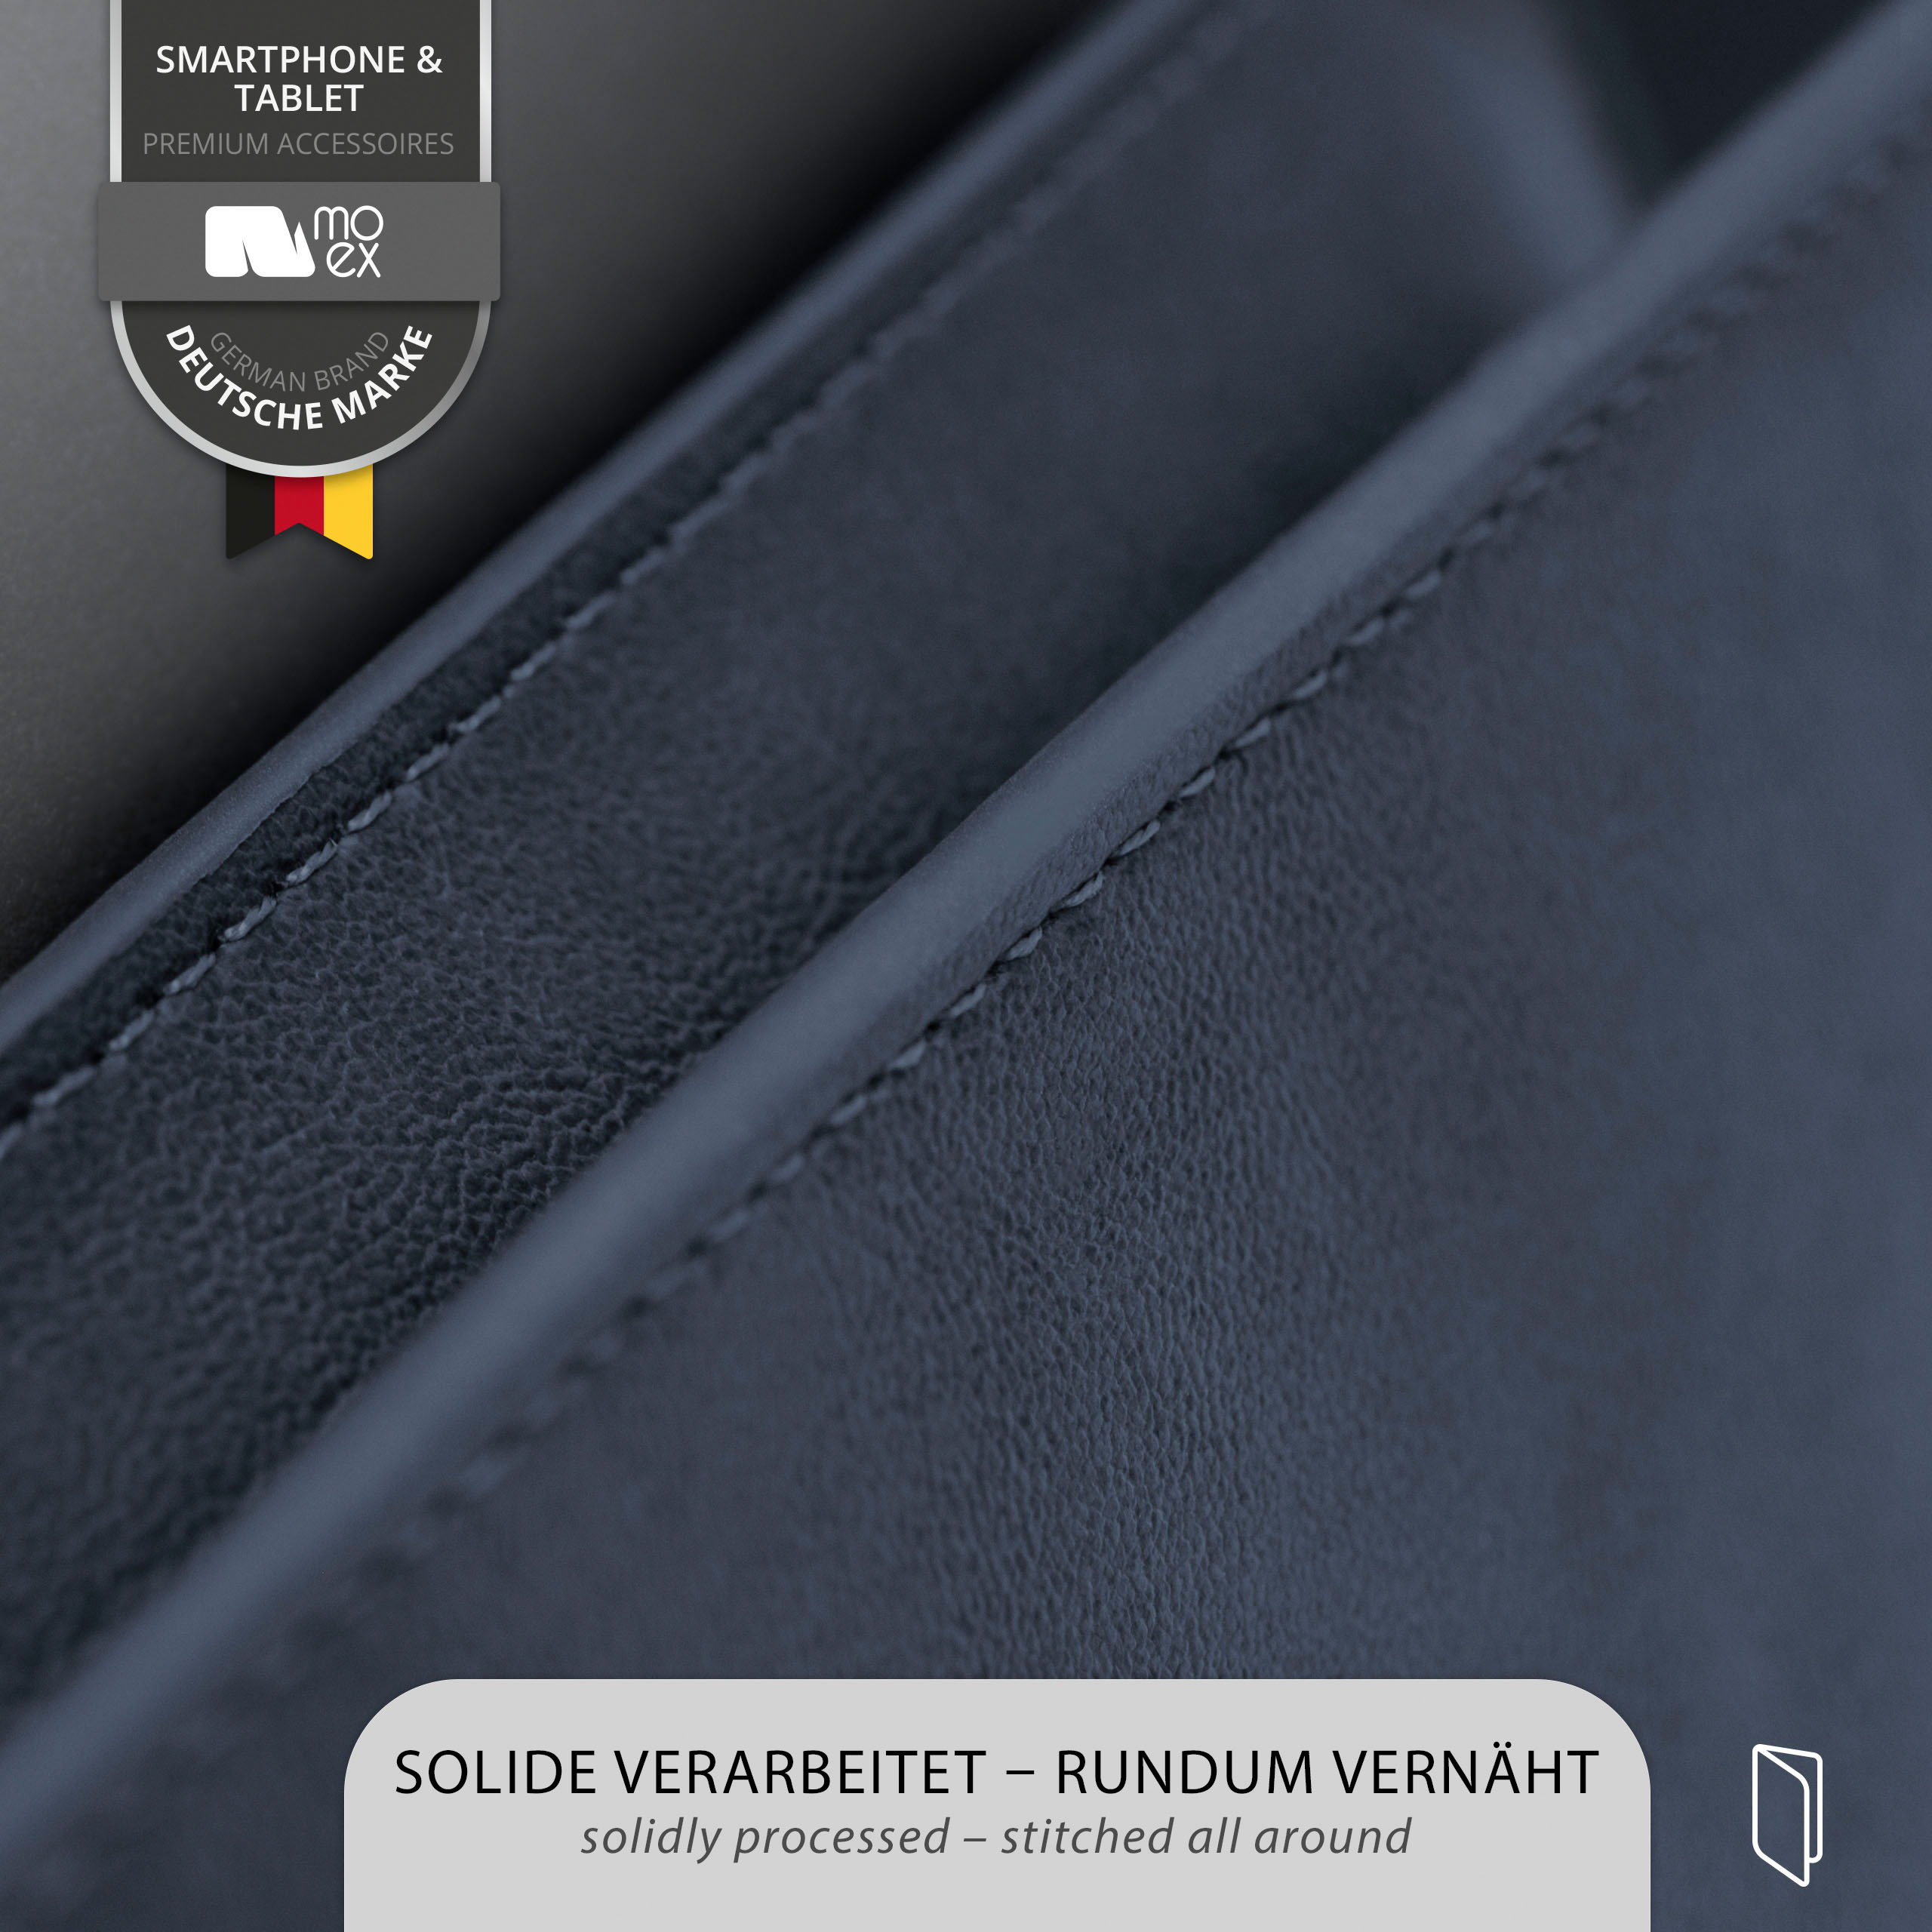 Xperia Dunkelblau Flip XZ1 MOEX Cover, Purse Sony, Compact, Case,